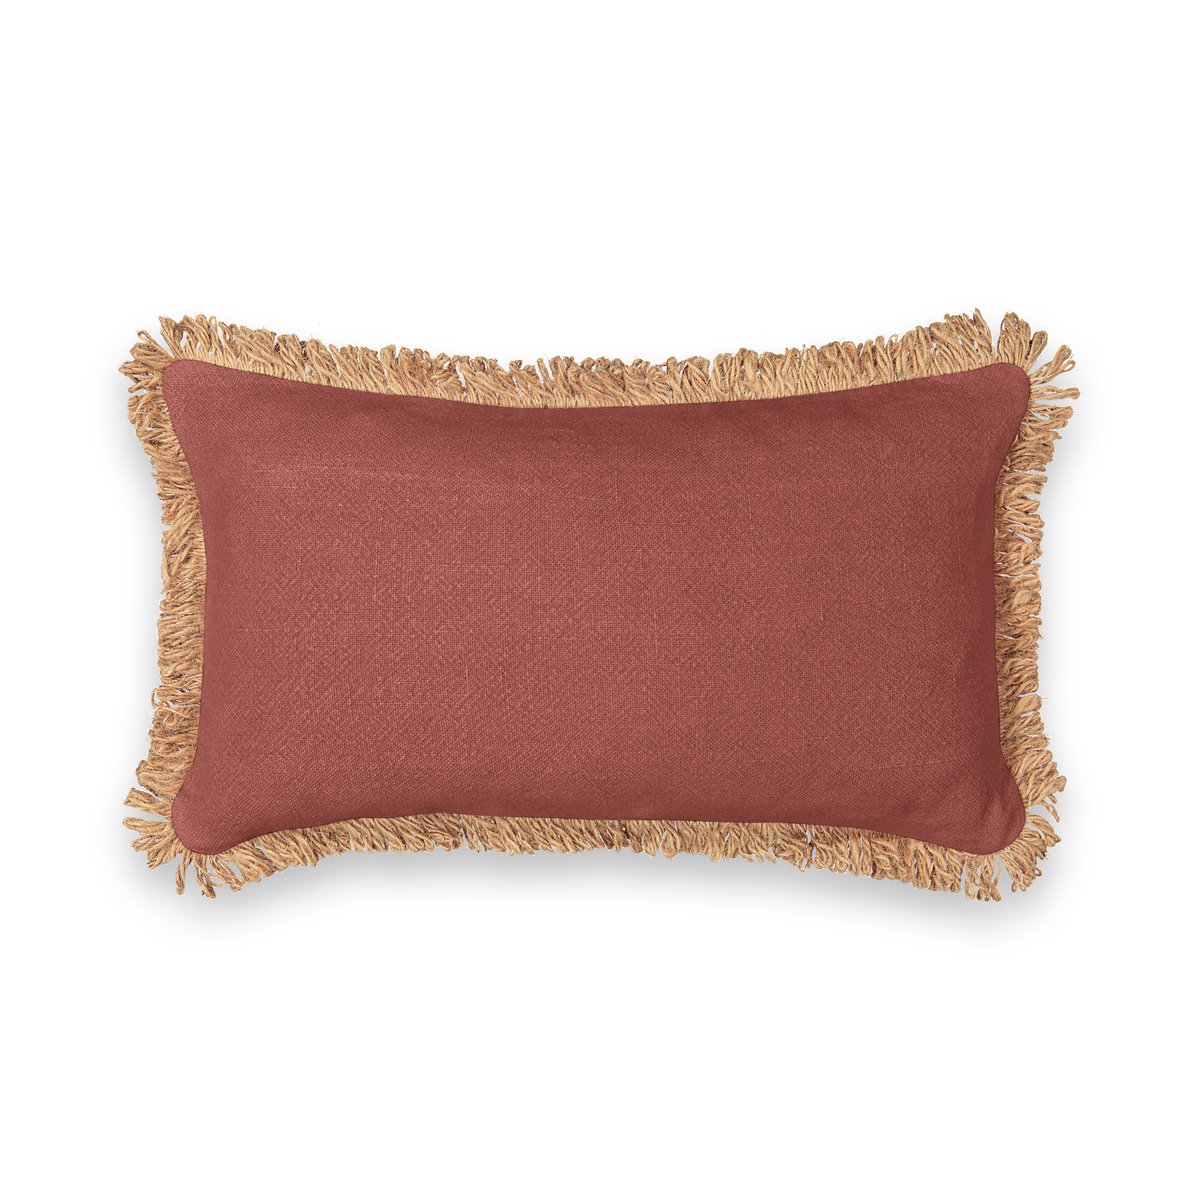 Чехол La Redoute На подушку из джута Jutty 50 x 50 см красный, размер 50 x 50 см - фото 2